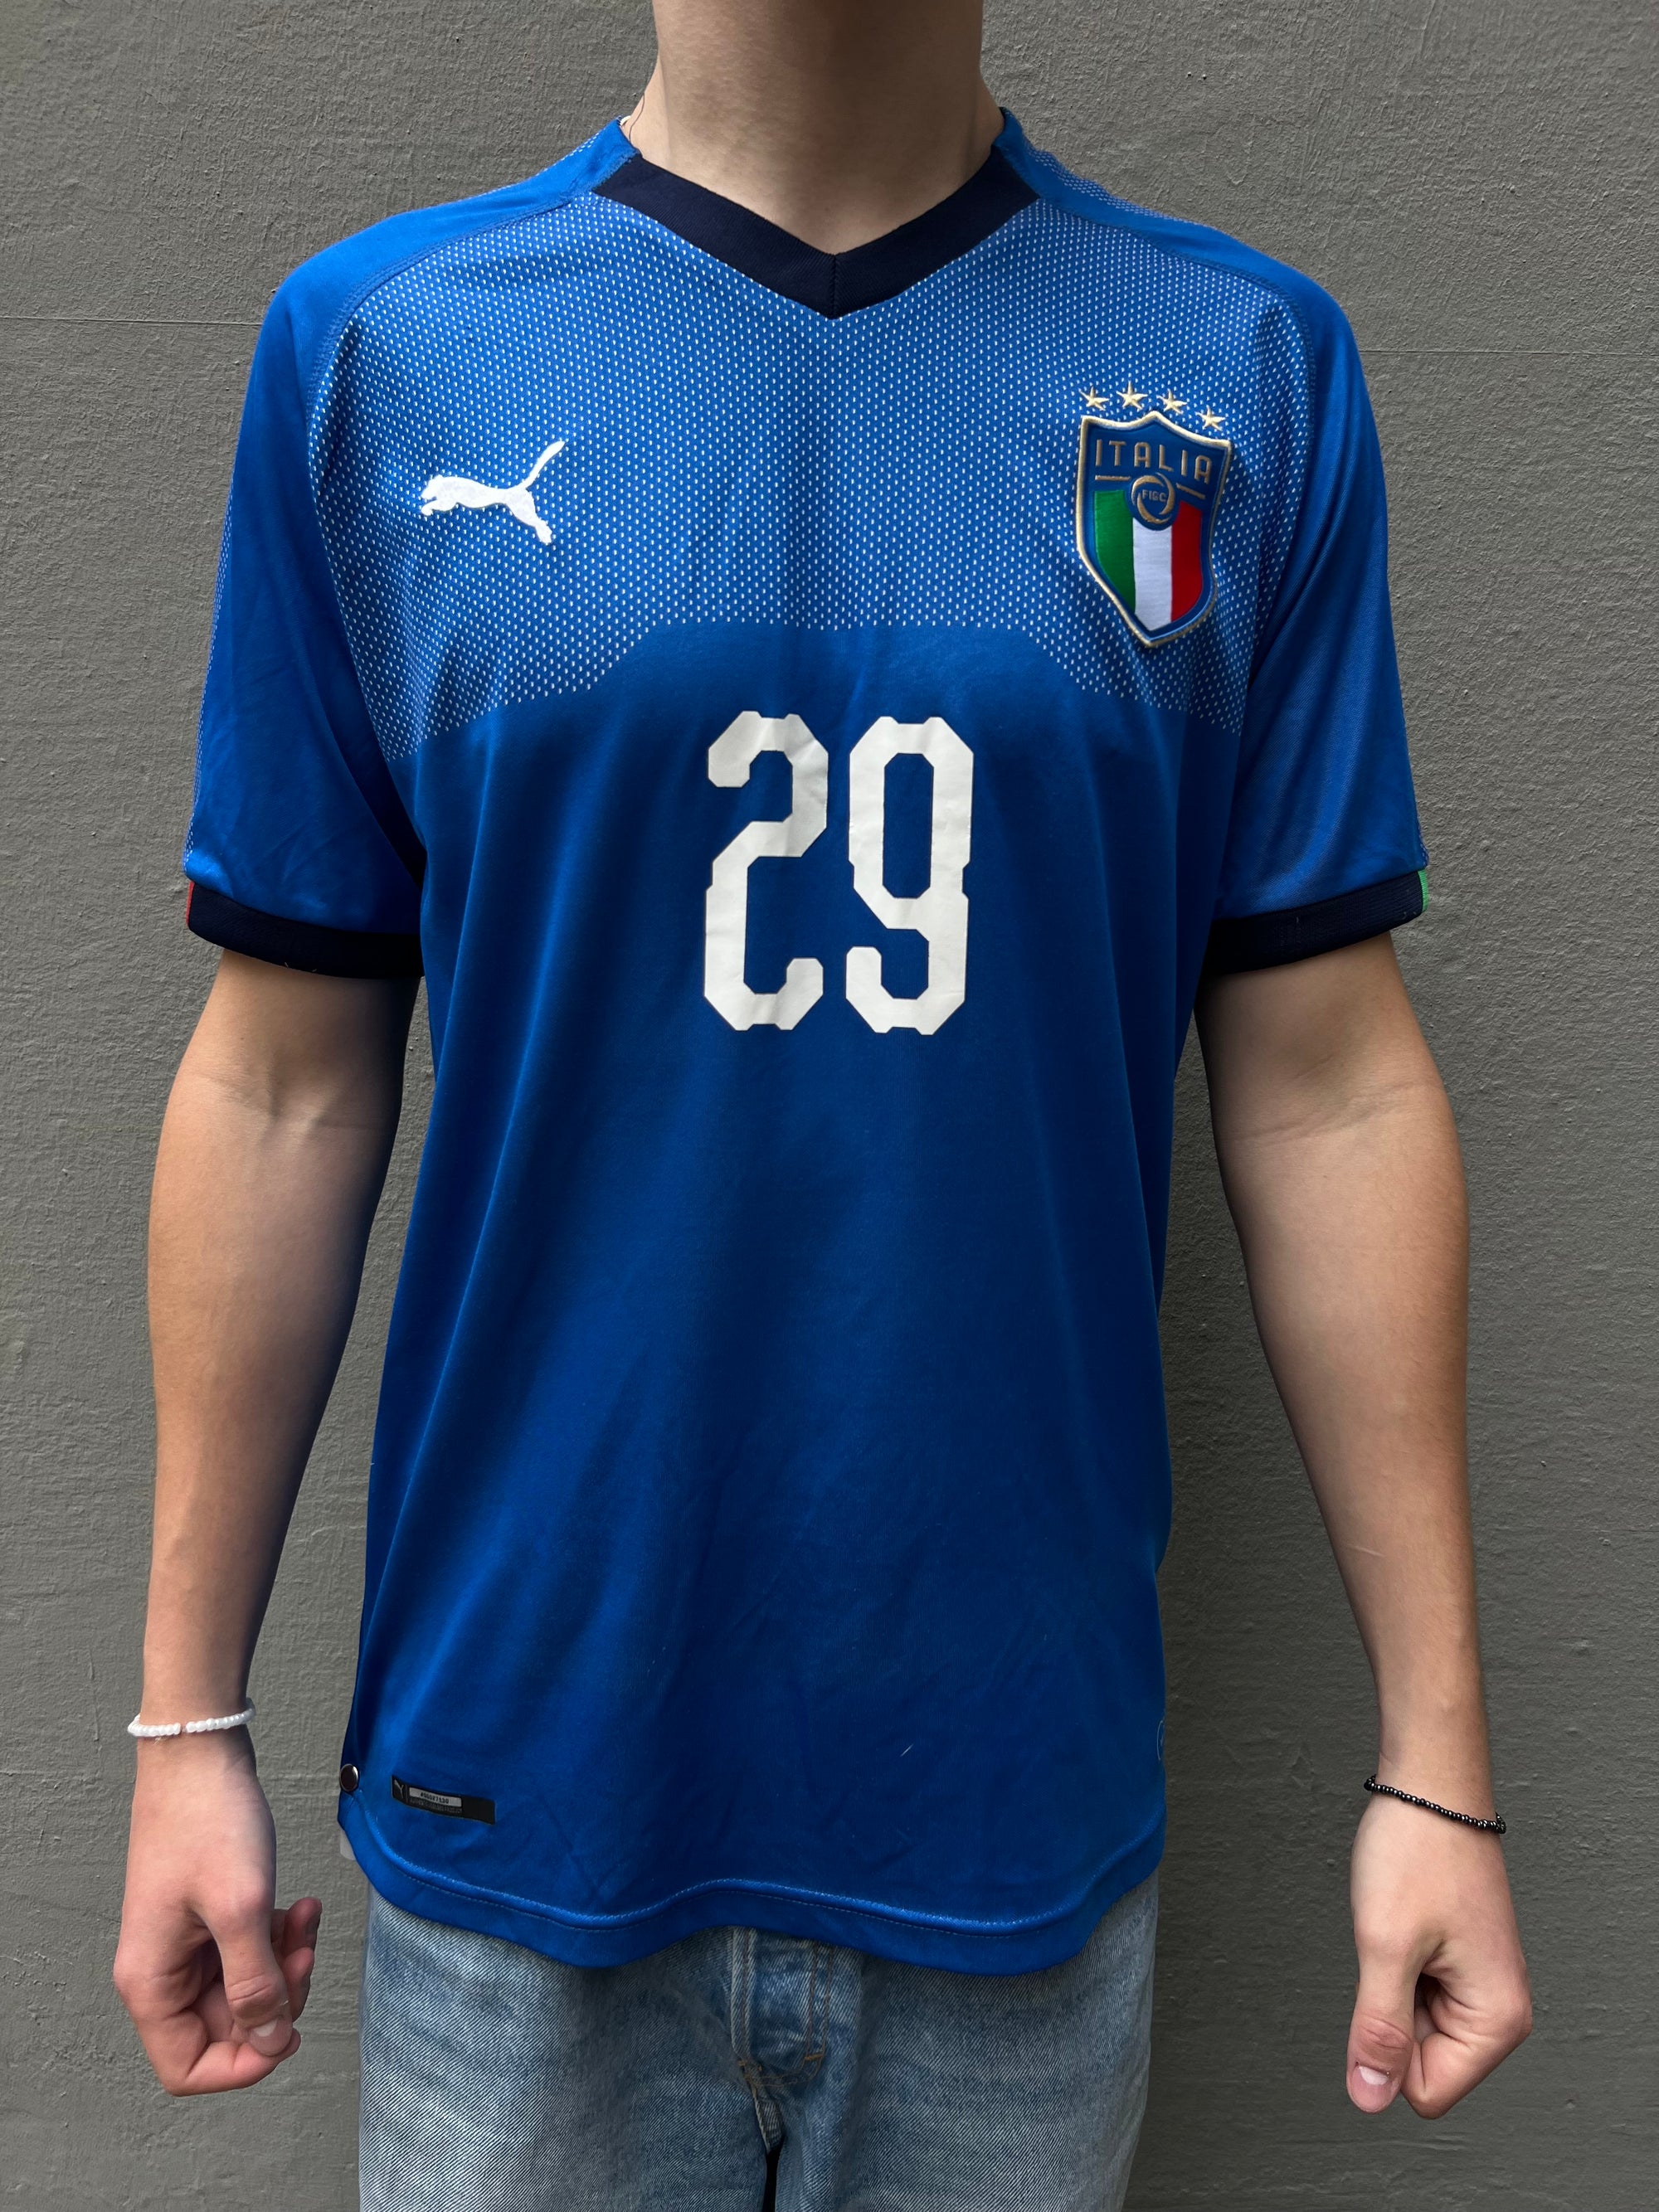 Vintage Puma Italia Soccer Jersey XL